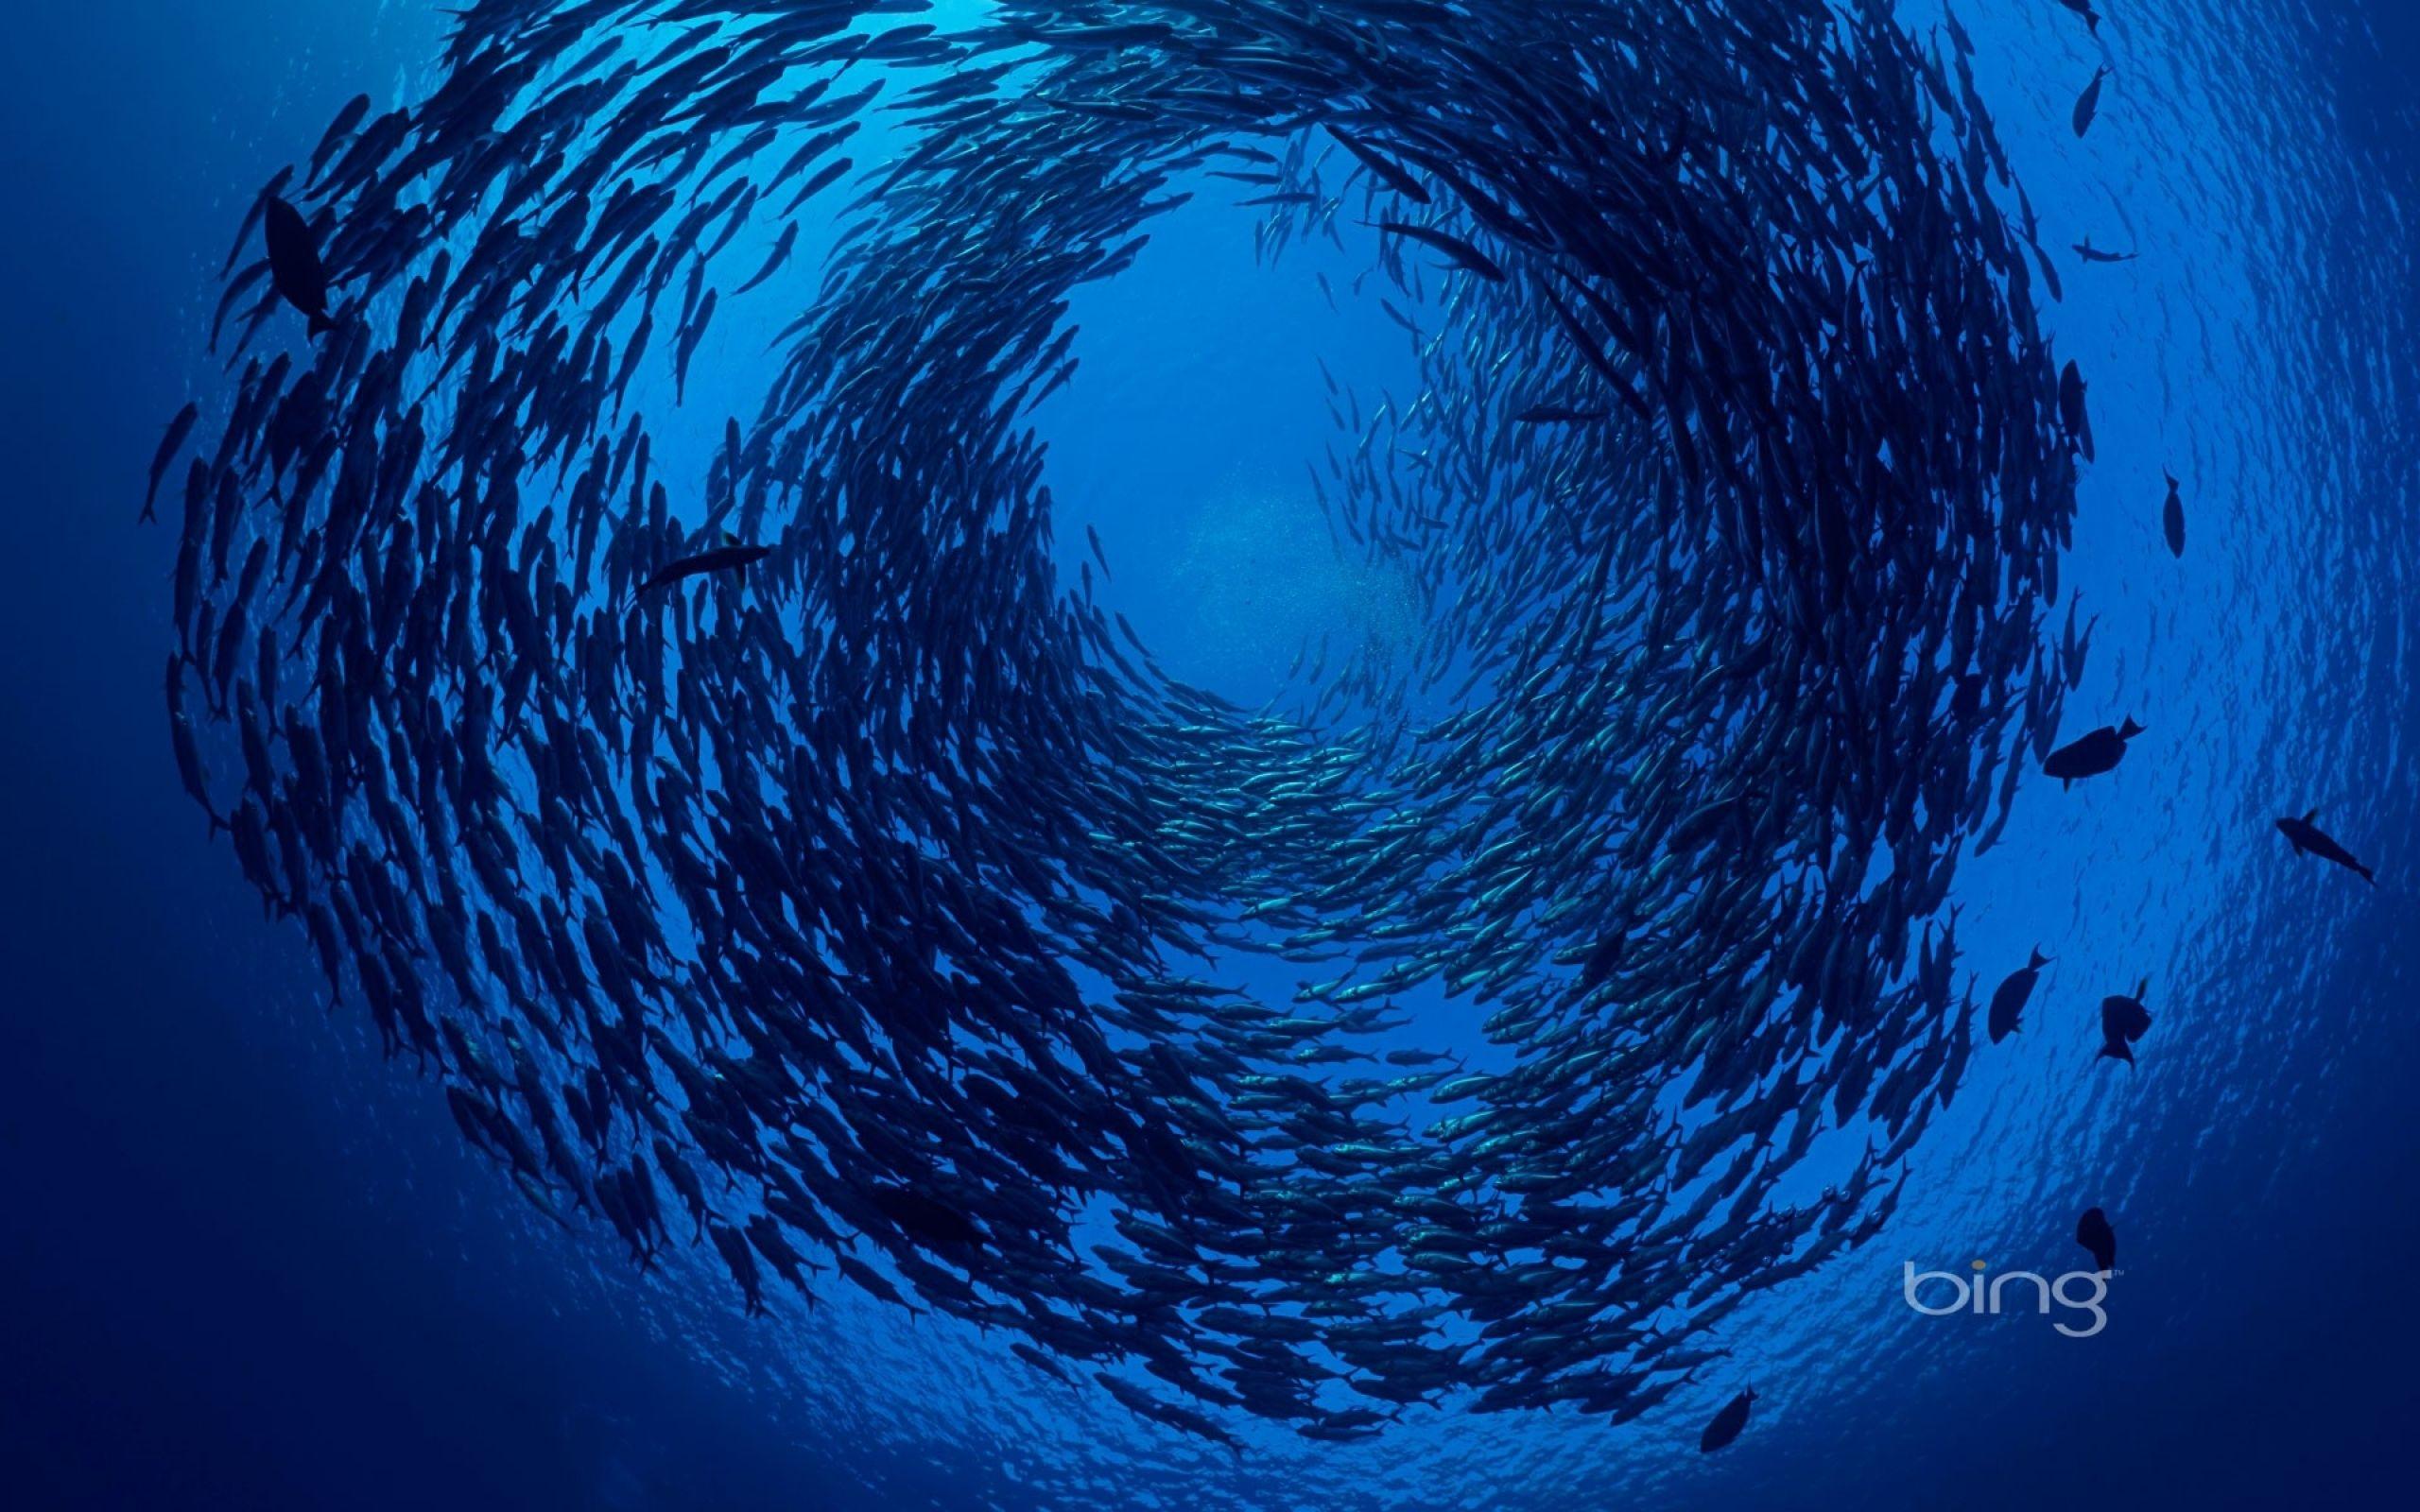 ocean swarm fish underwater bali bing Wallpaper. NEXT Coworking